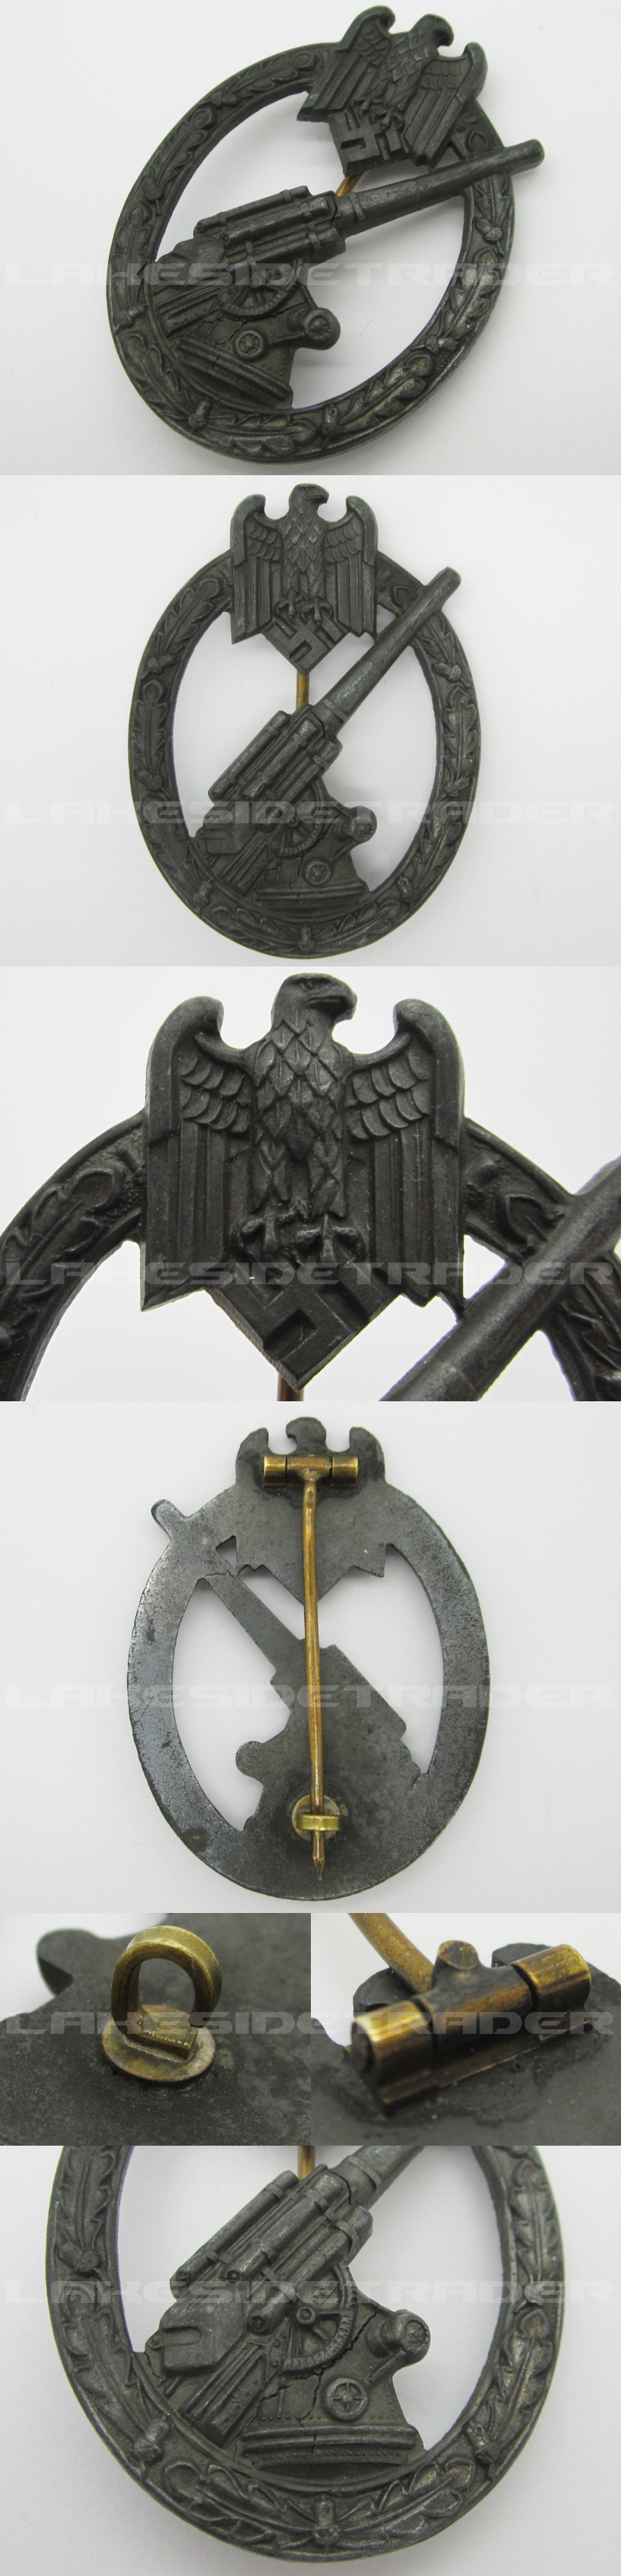 Army Flak Badge by C.E. Juncker